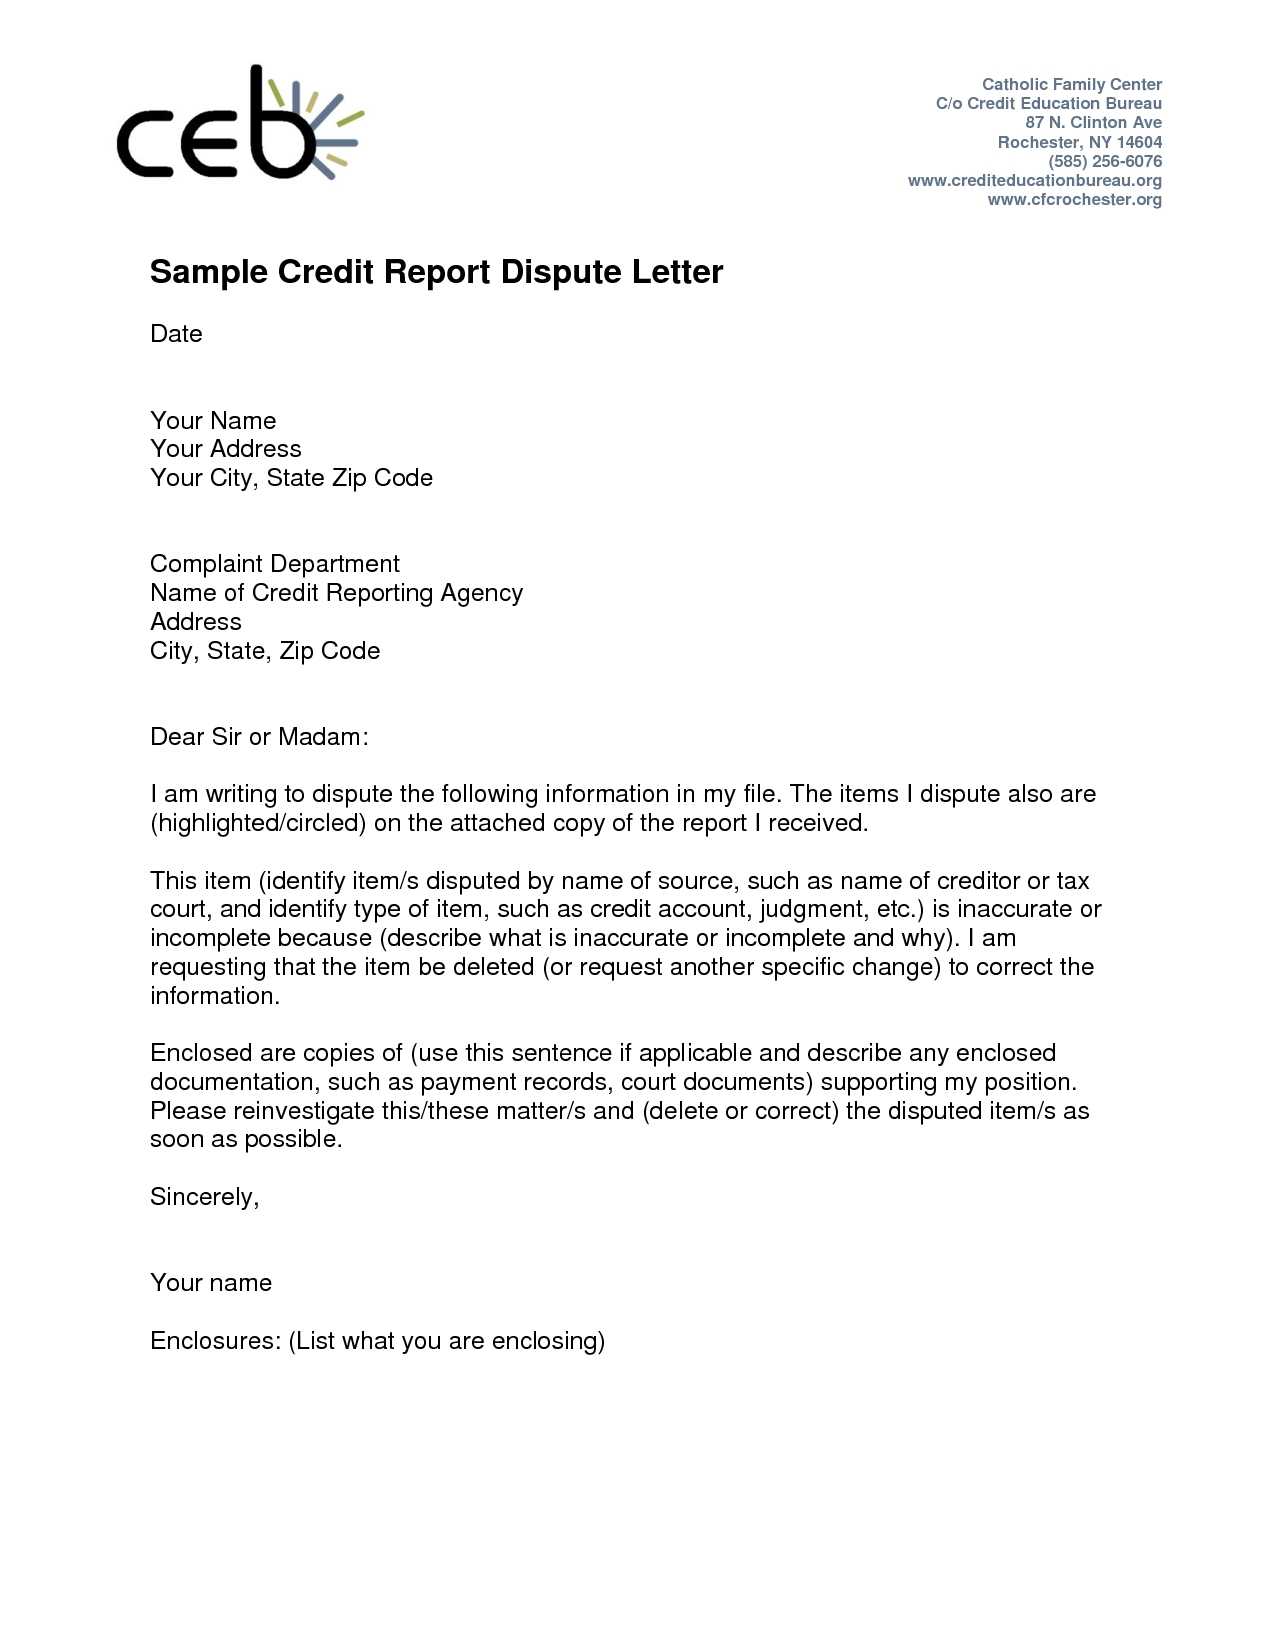 Report Examples Credit Dispute Letter Templates Acurnamedia For Credit Dispute Letter Template